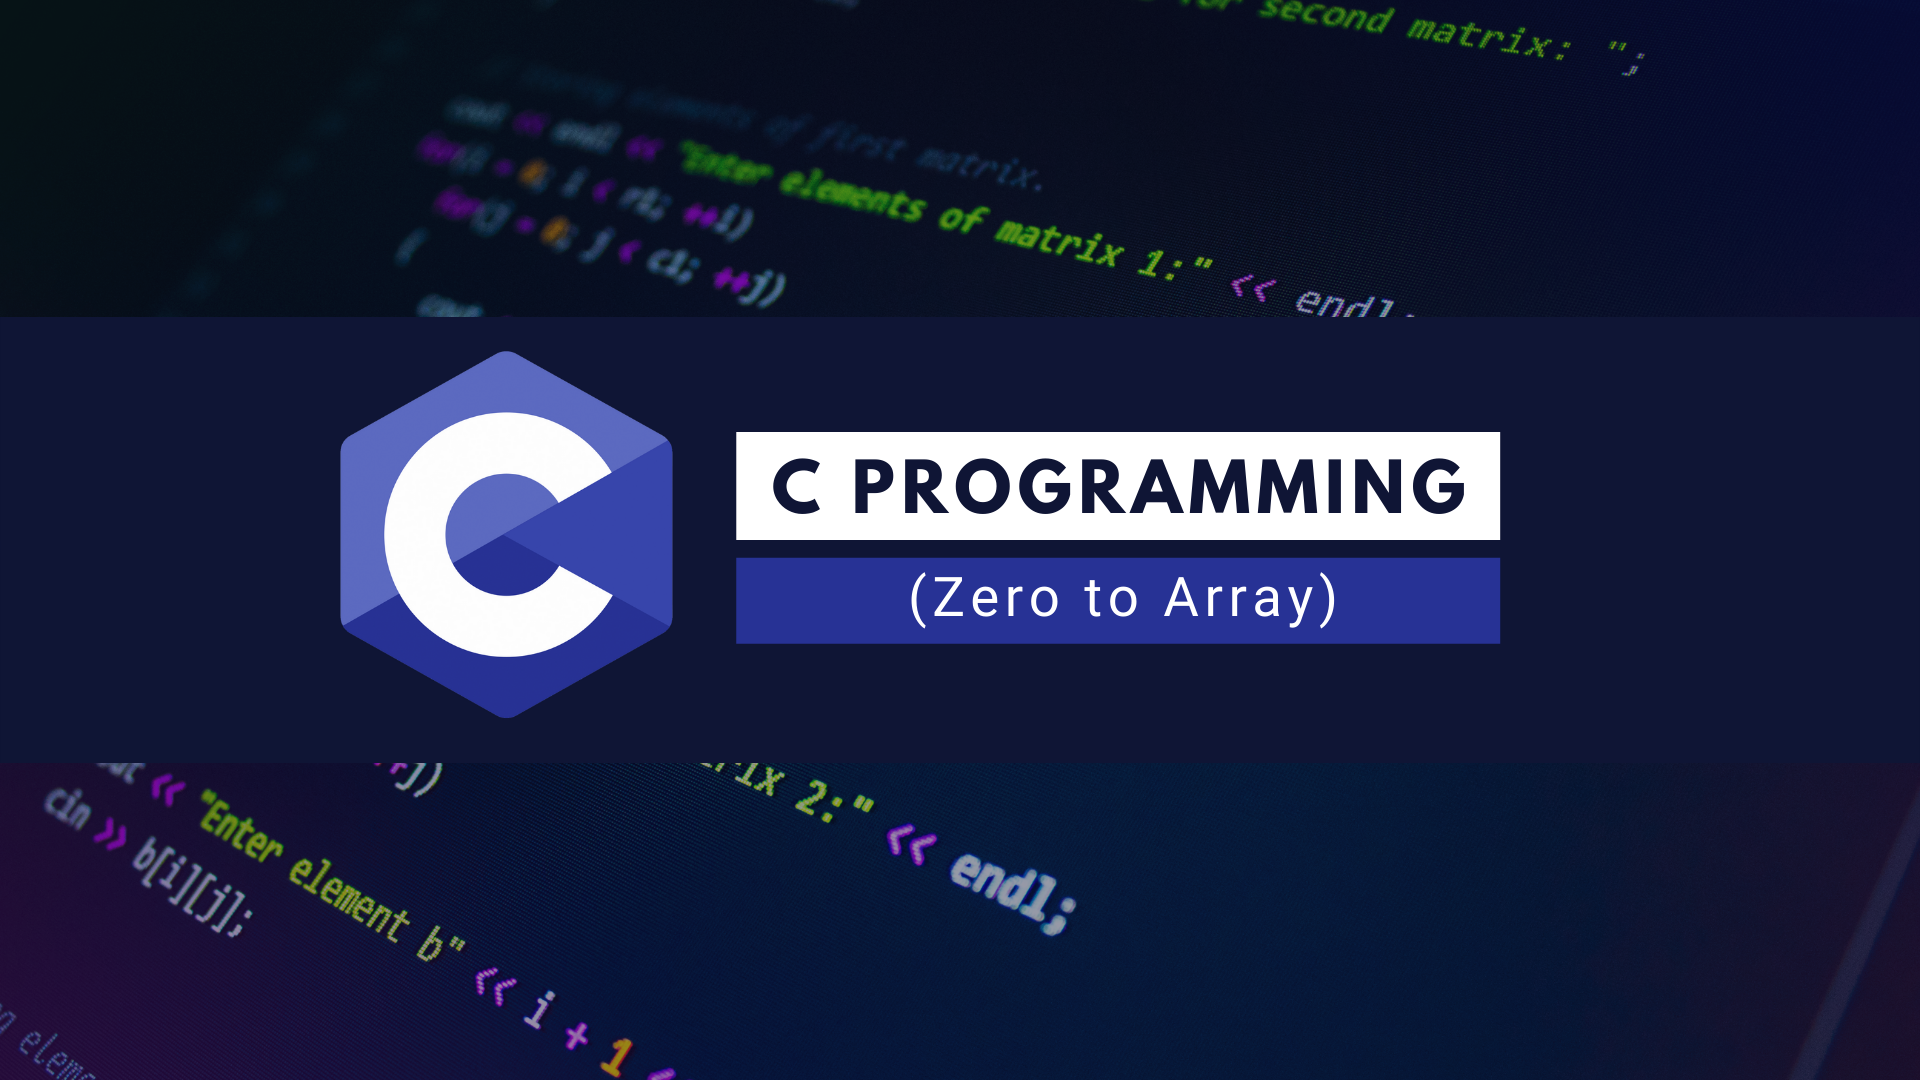 C programming (Zero to Array) course image